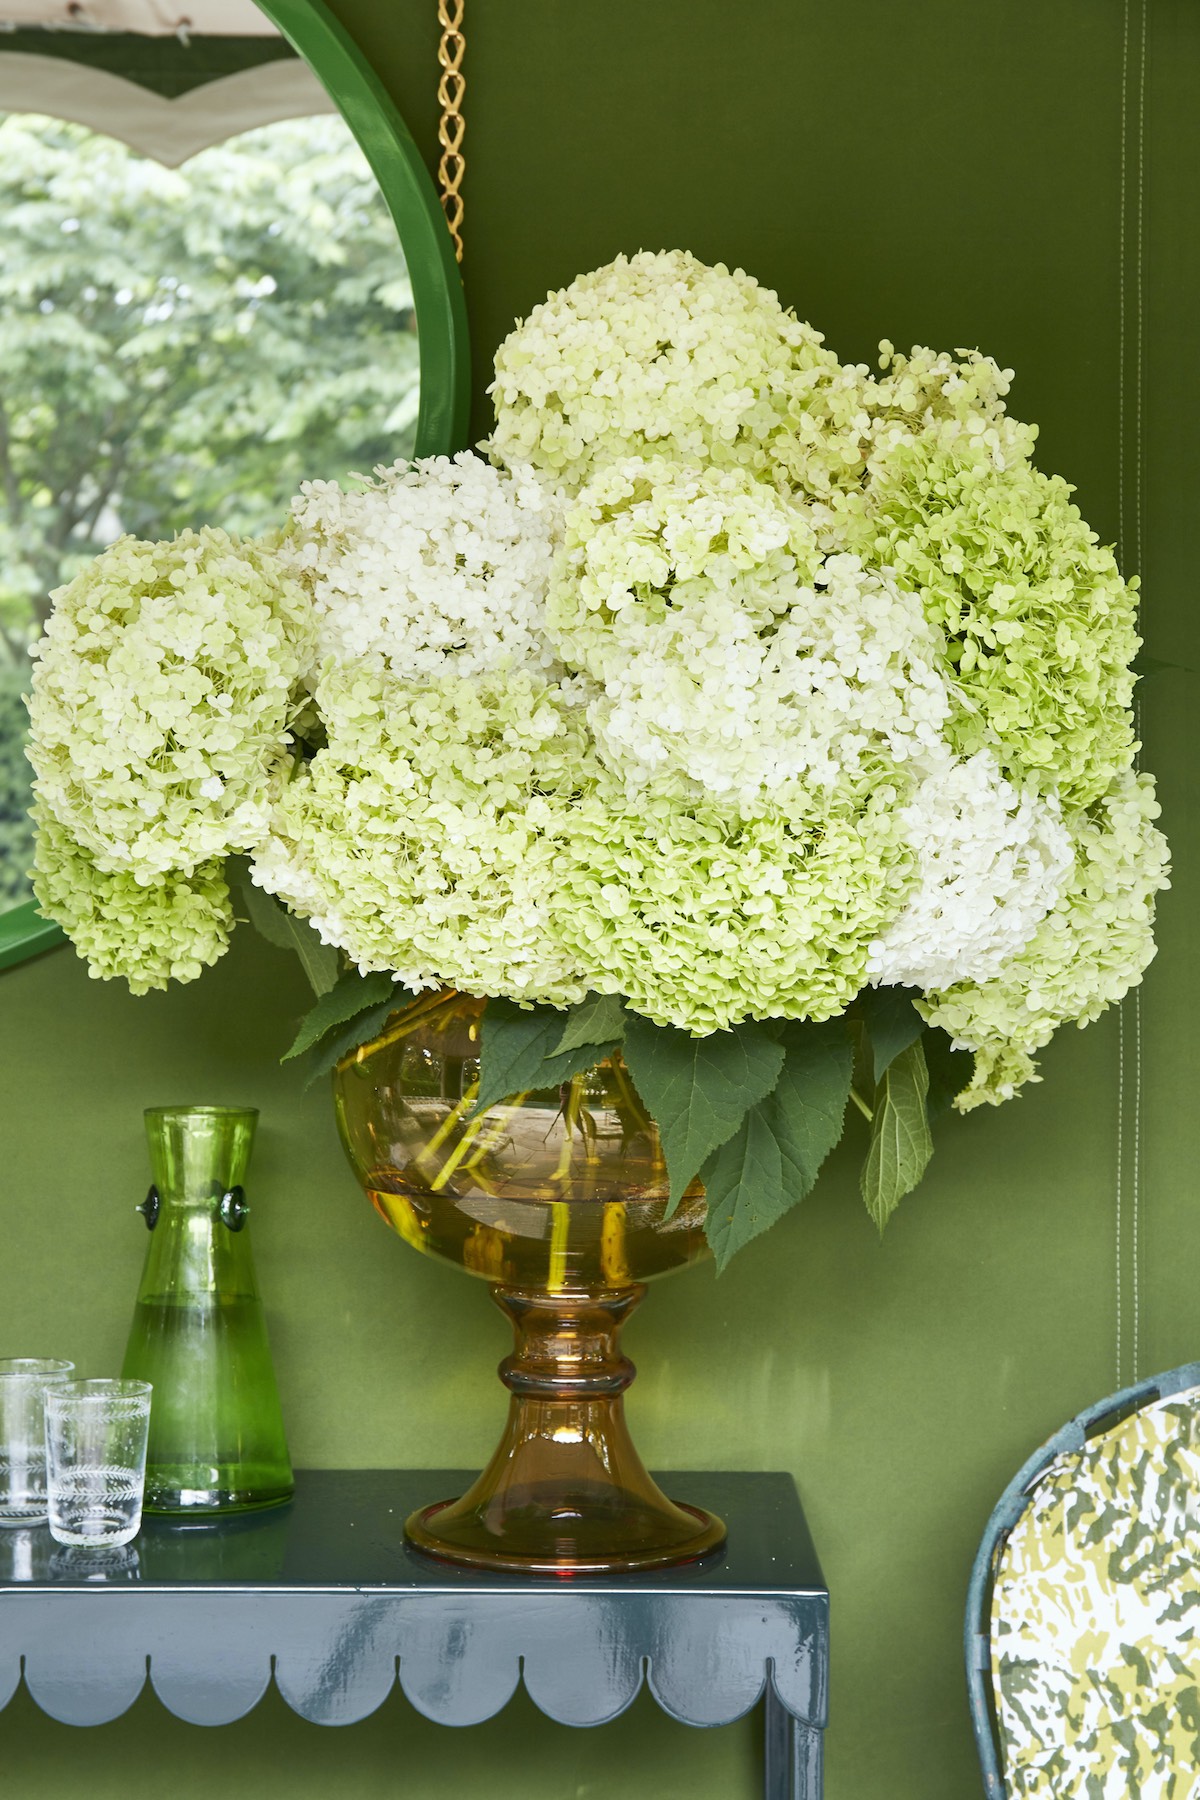 Amber glass vase of green and white Annabelle hydrangeas.